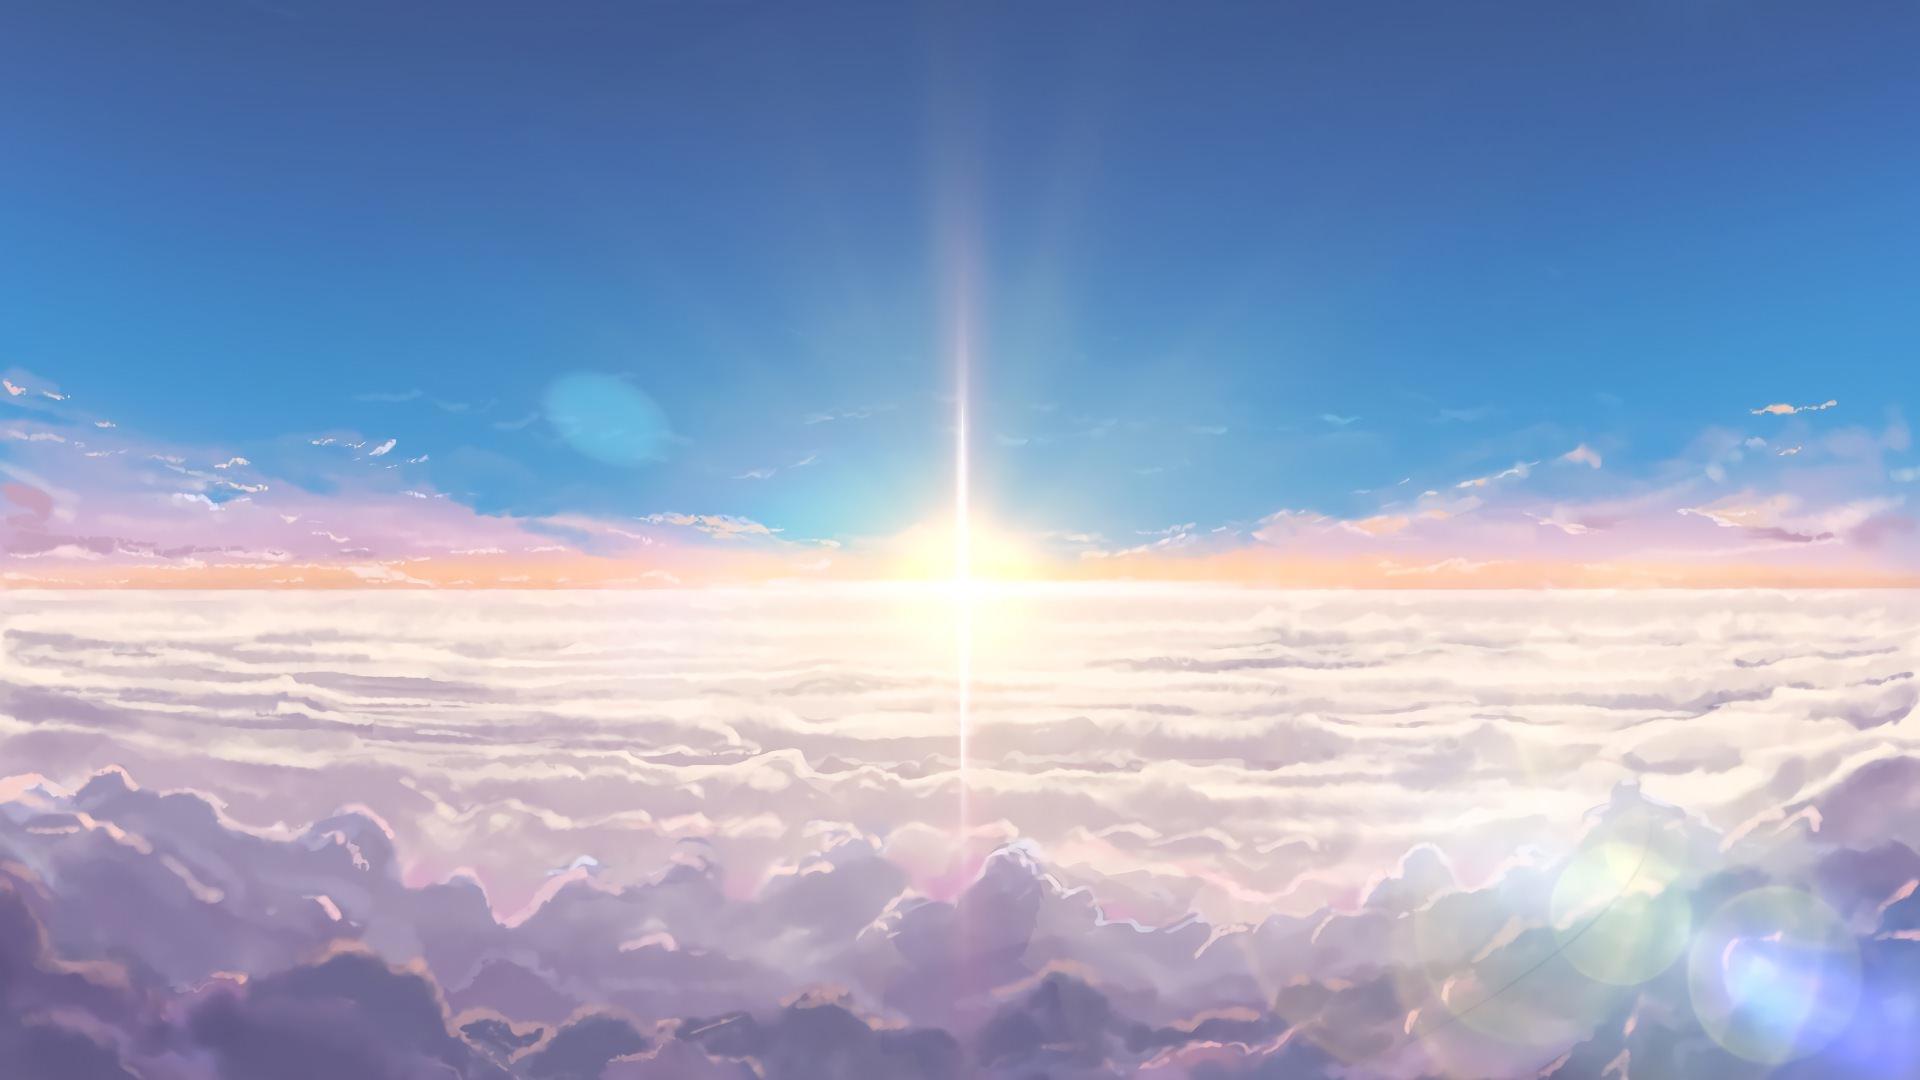 1920x1080 Your Name Anime Clouds Sky Sunrise S. Hình nền